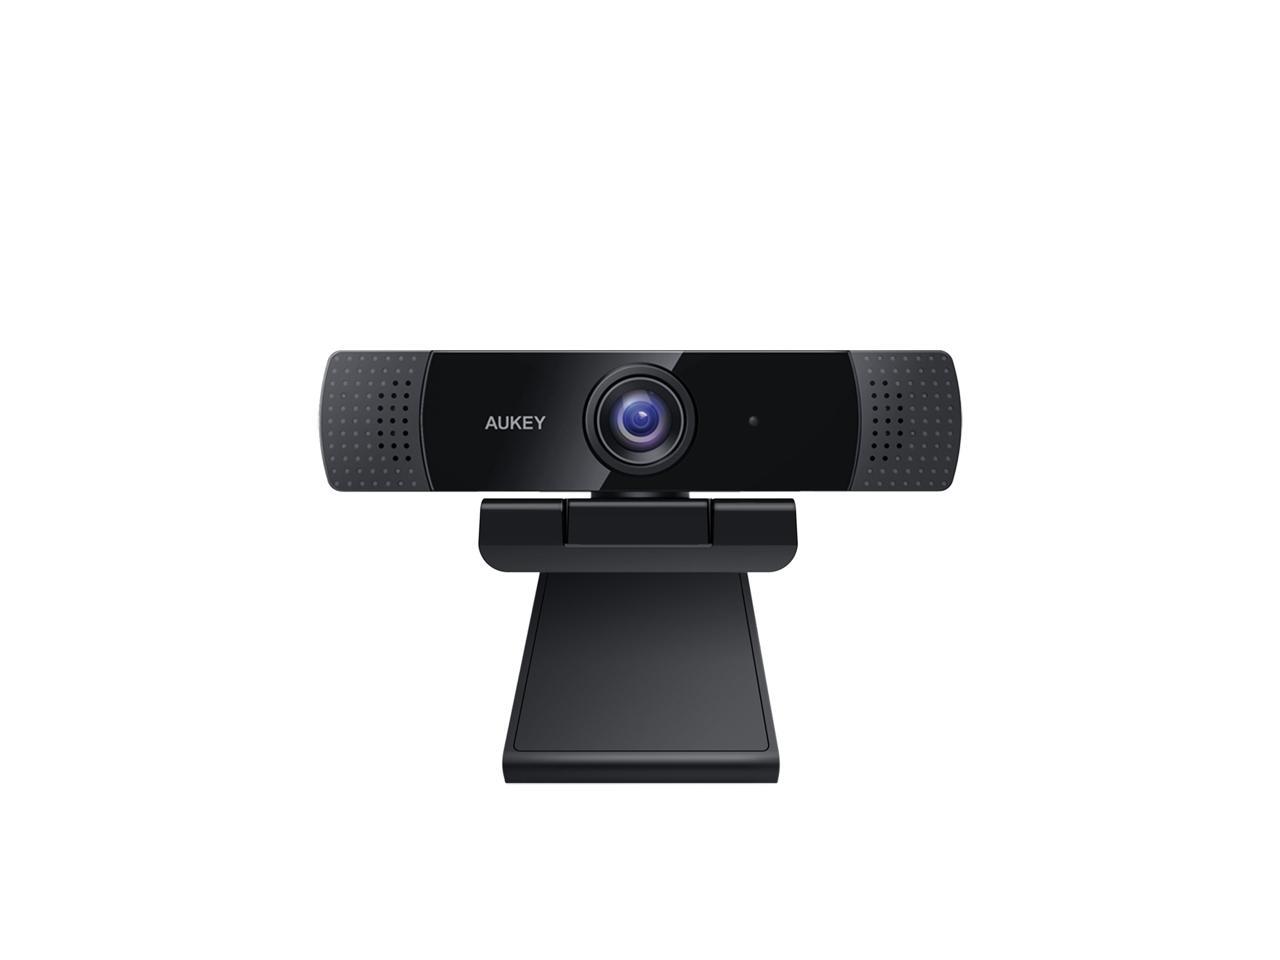 Aukey 1080P Webcam $17.45  at Newegg